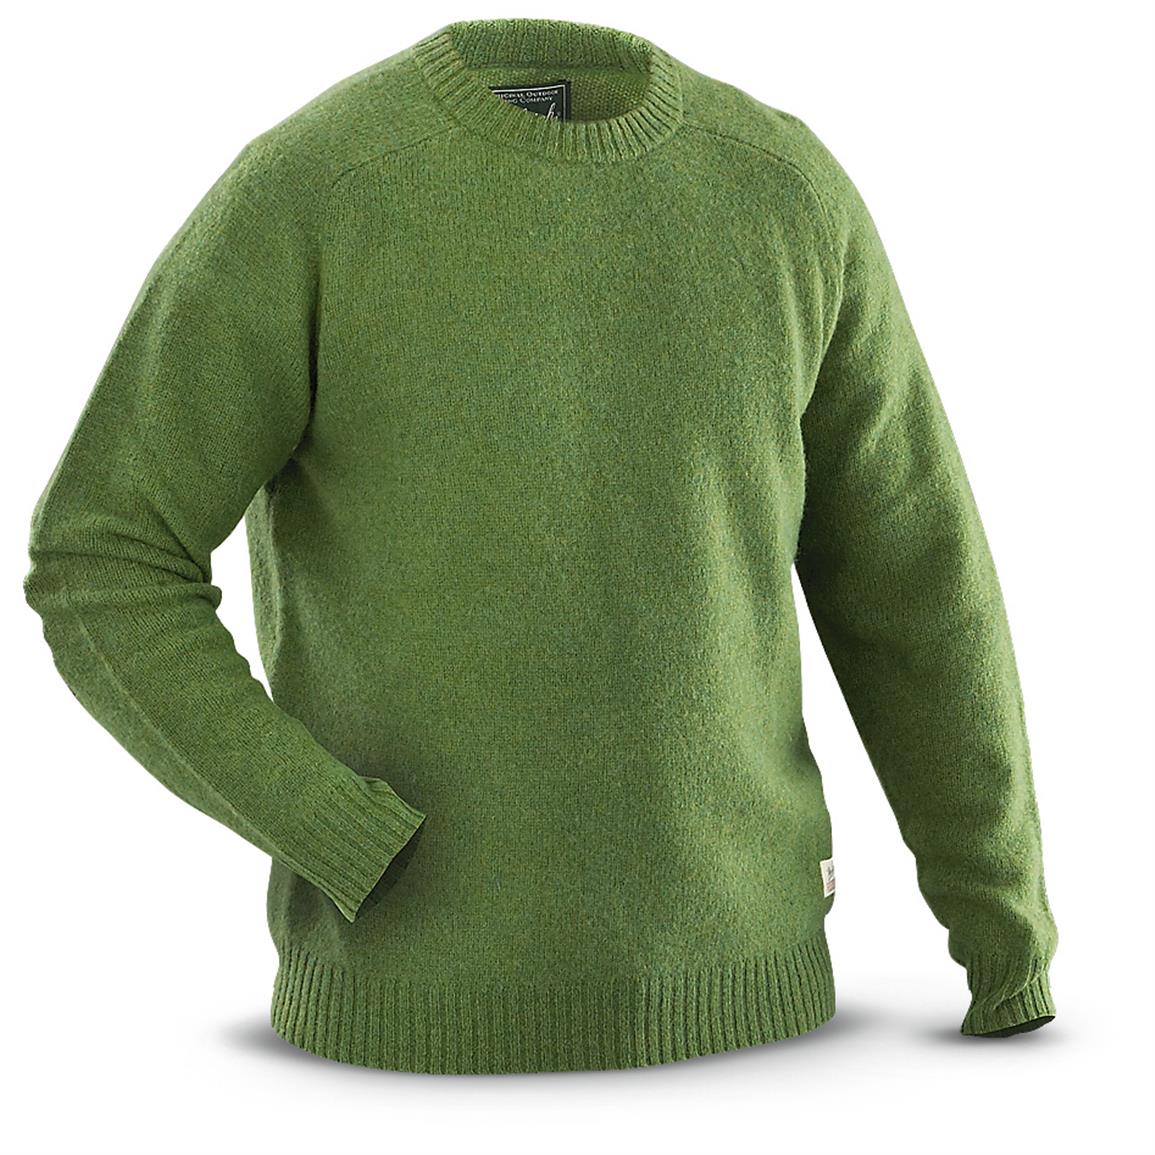 Used Norwegian Military Surplus Wool Sweater - 87766, Sweaters at ...